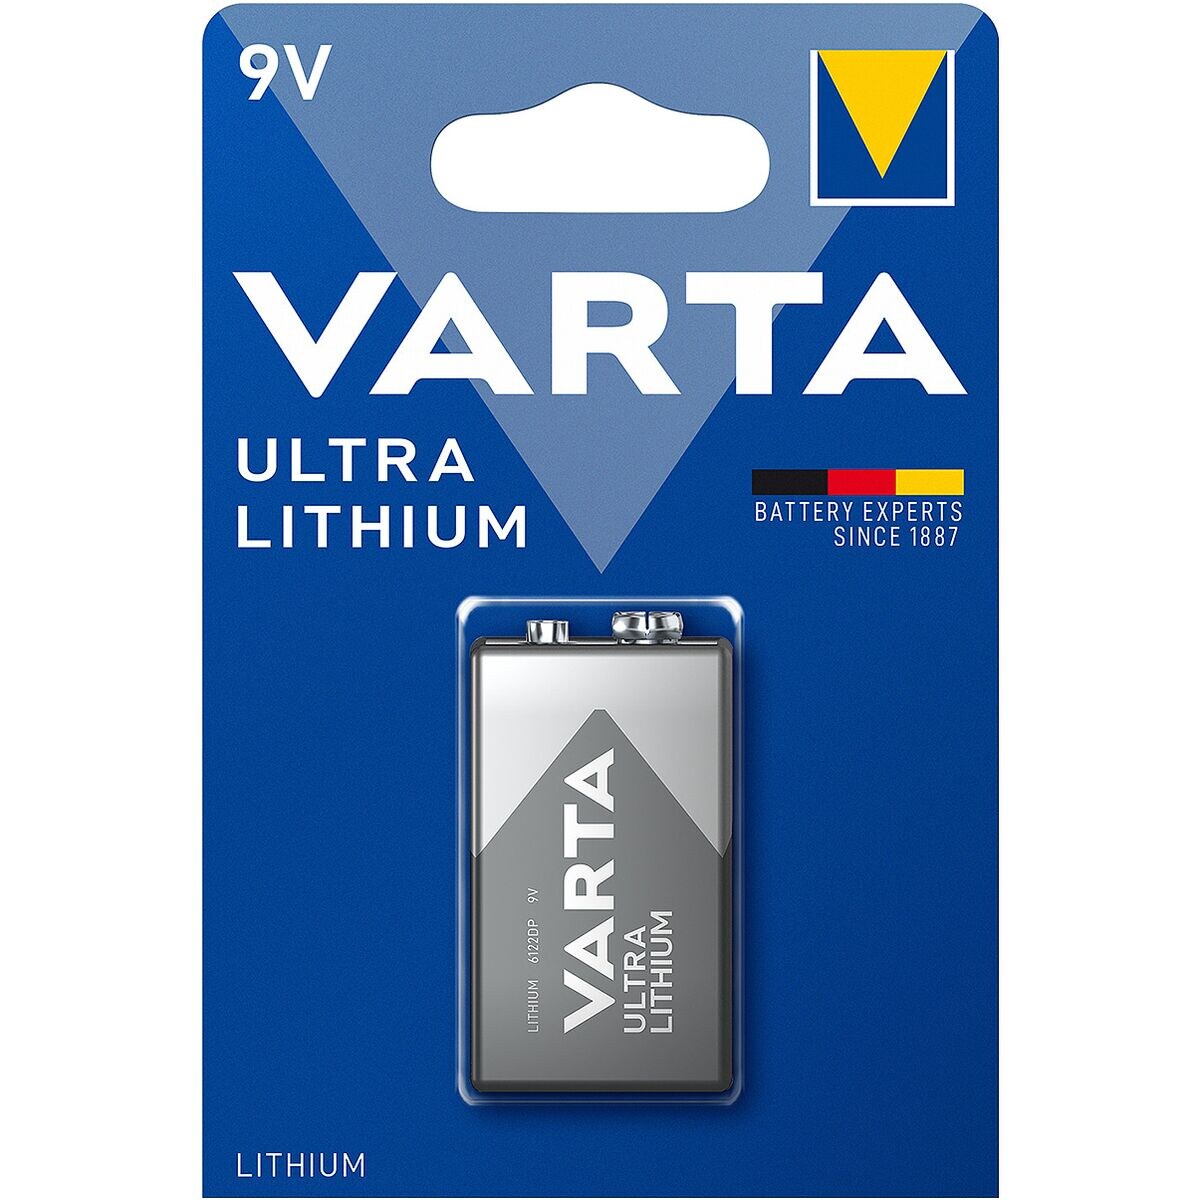 Varta Batterie ULTRA LITHIUM E-Block / 6LR61